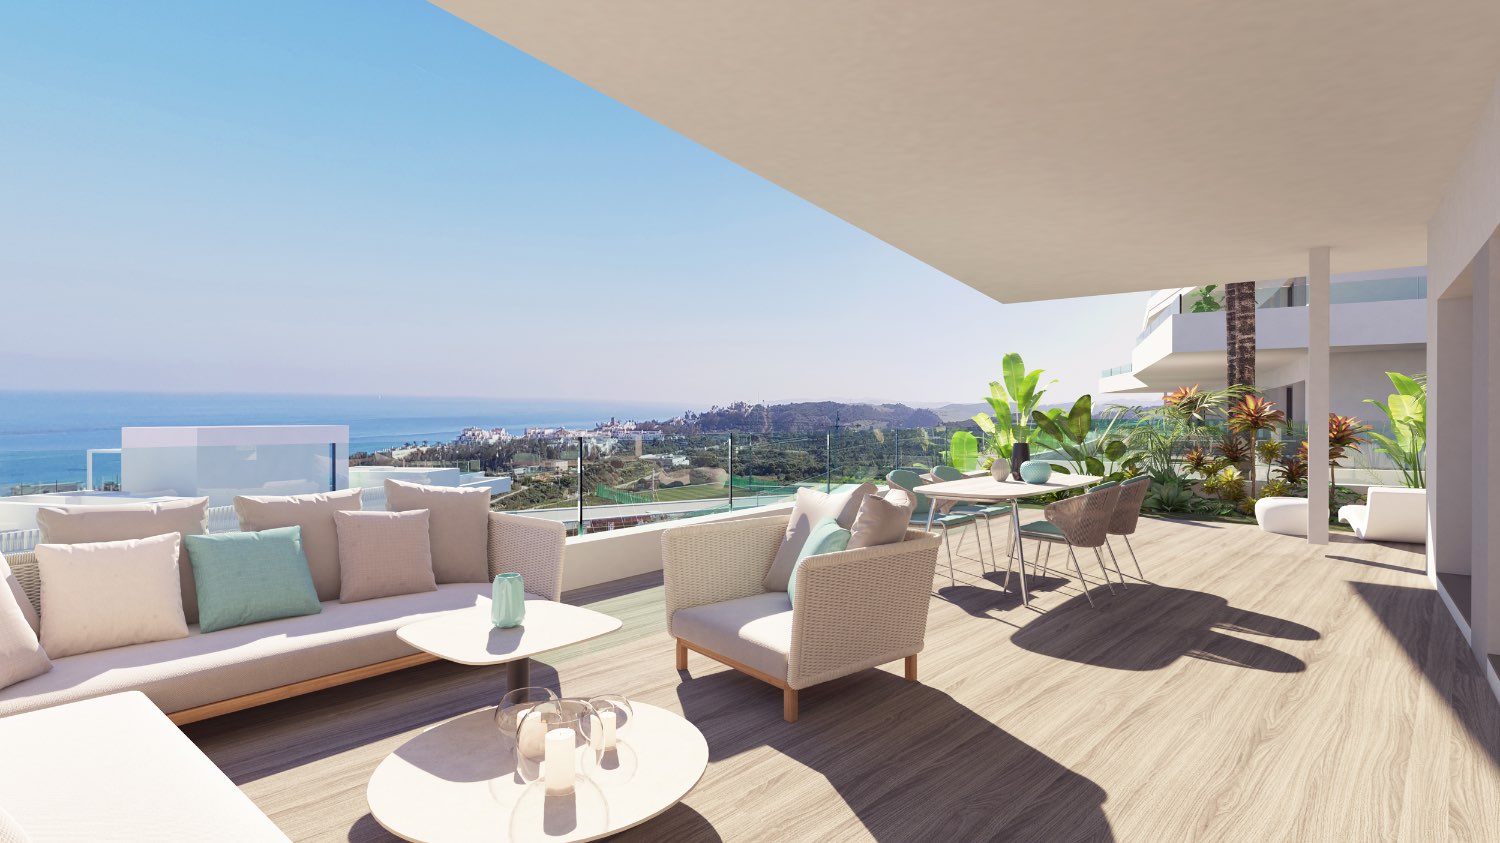 Luxury ground floor apartment in a new development in Estepona - Costa del Sol